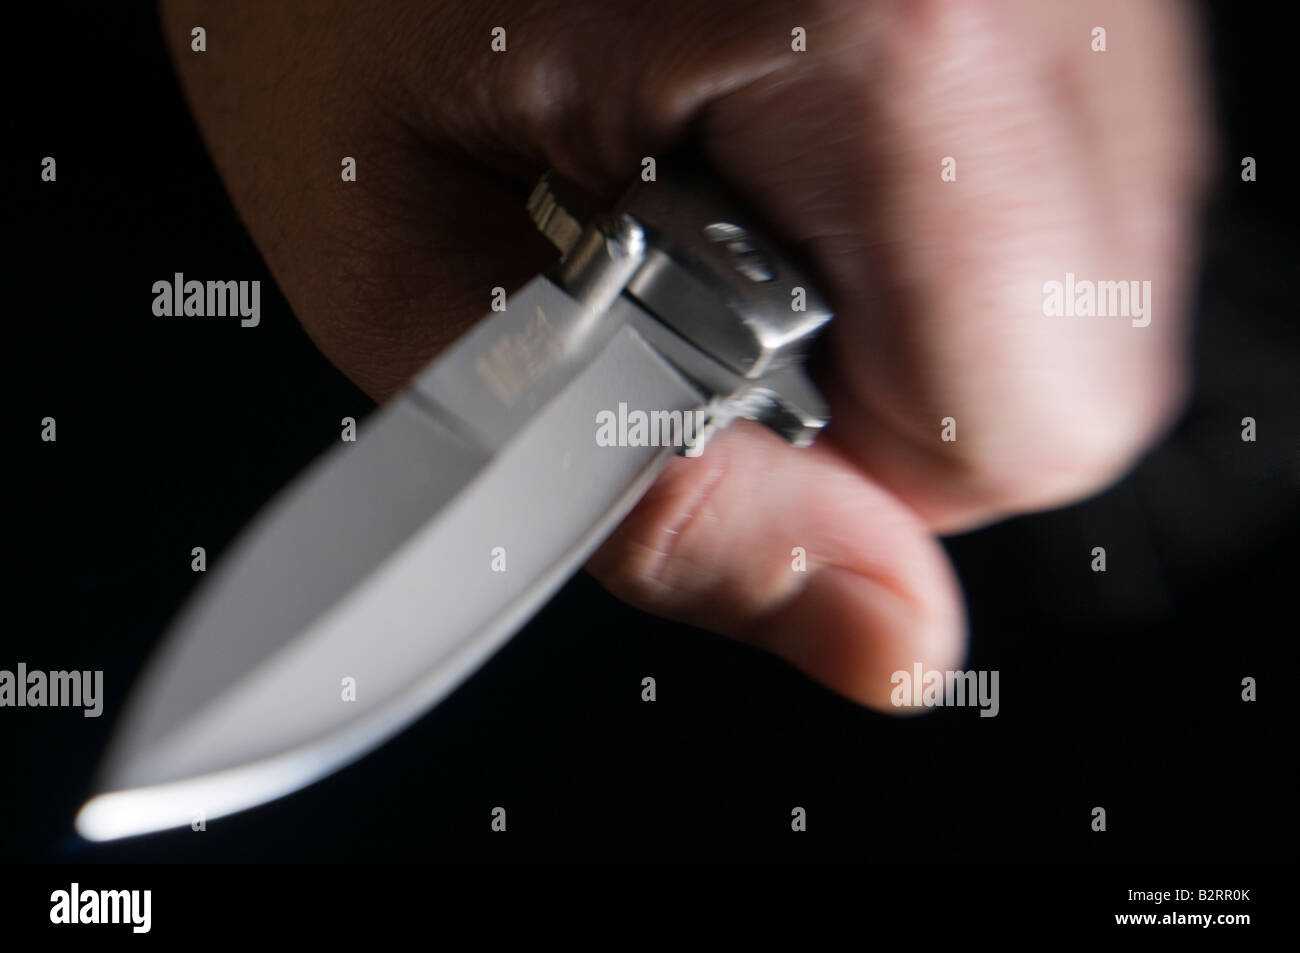 Hand holding knife blade against dark background Stock Photo